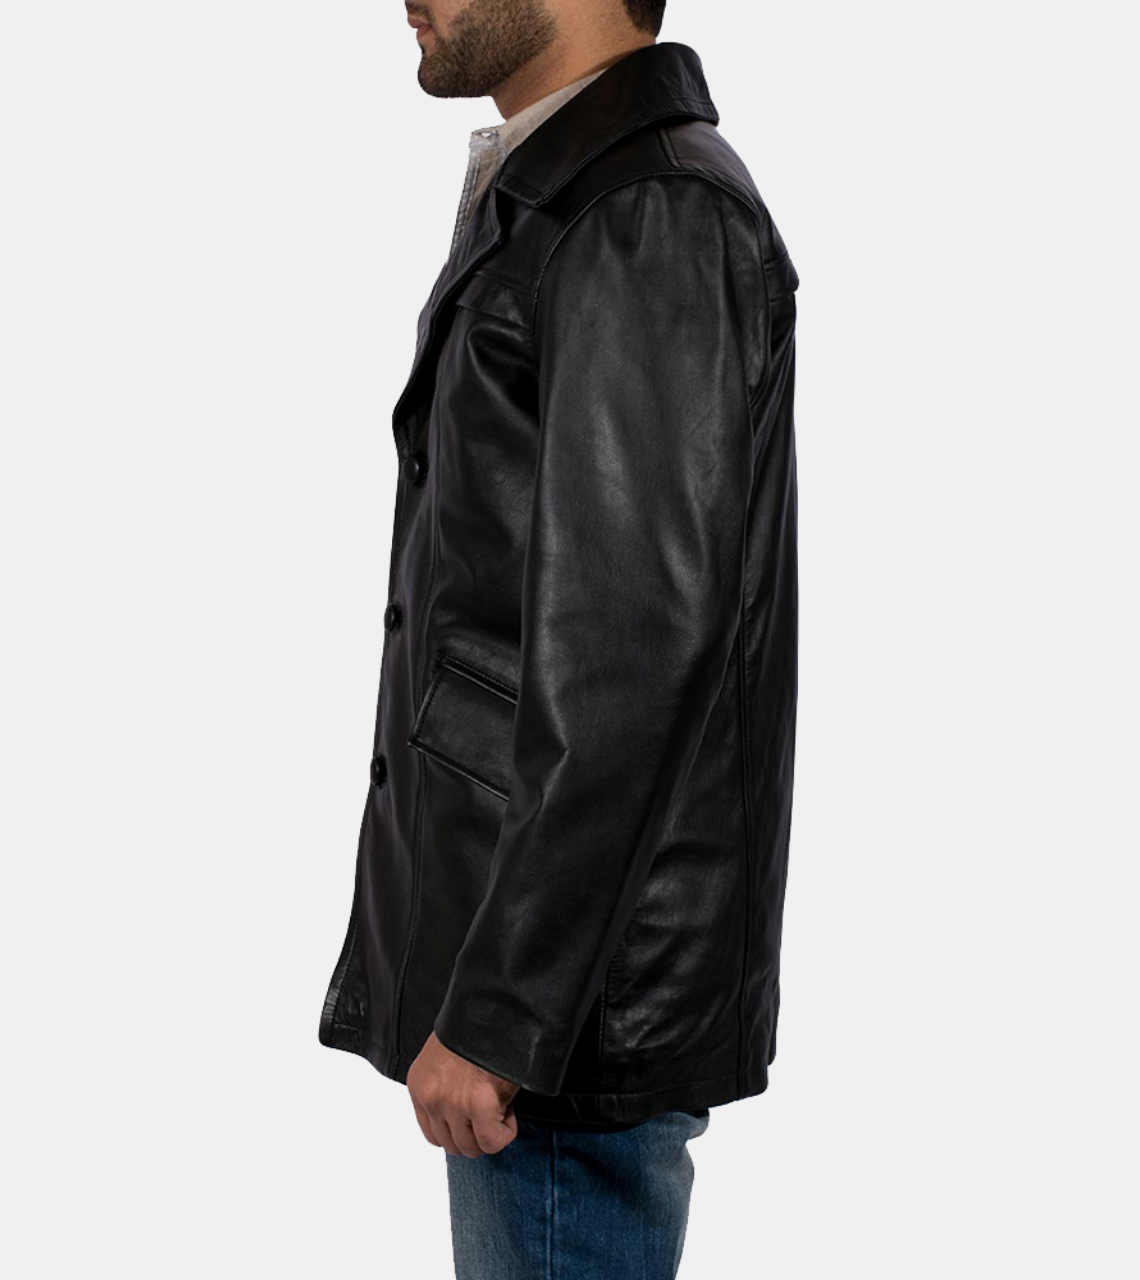  Black Leather Coat 